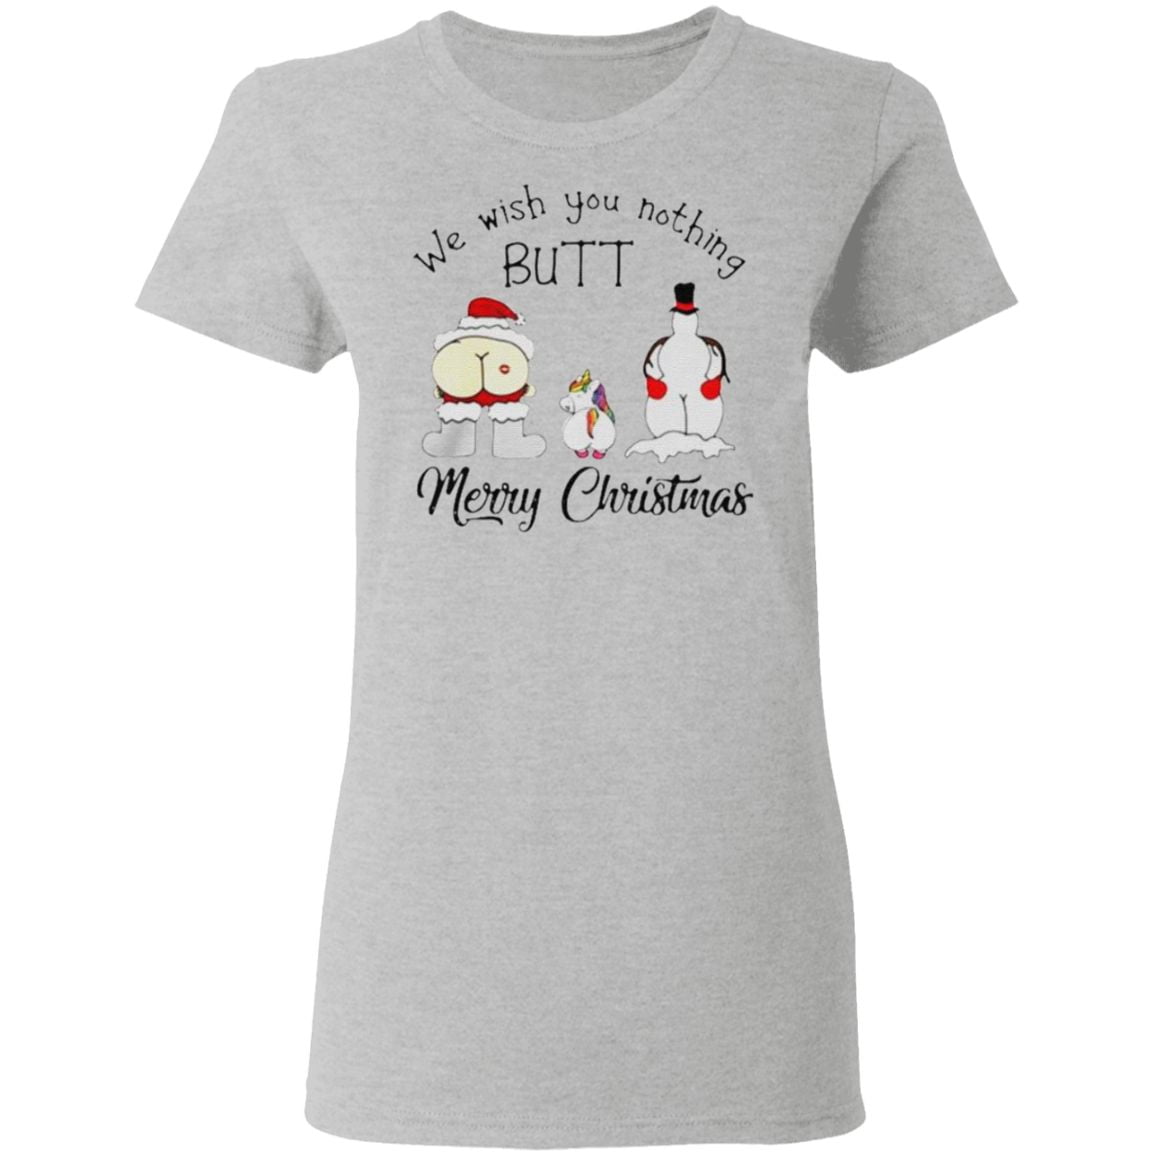 Unicorn we wish you nothing butt Merry Christmas t shirt